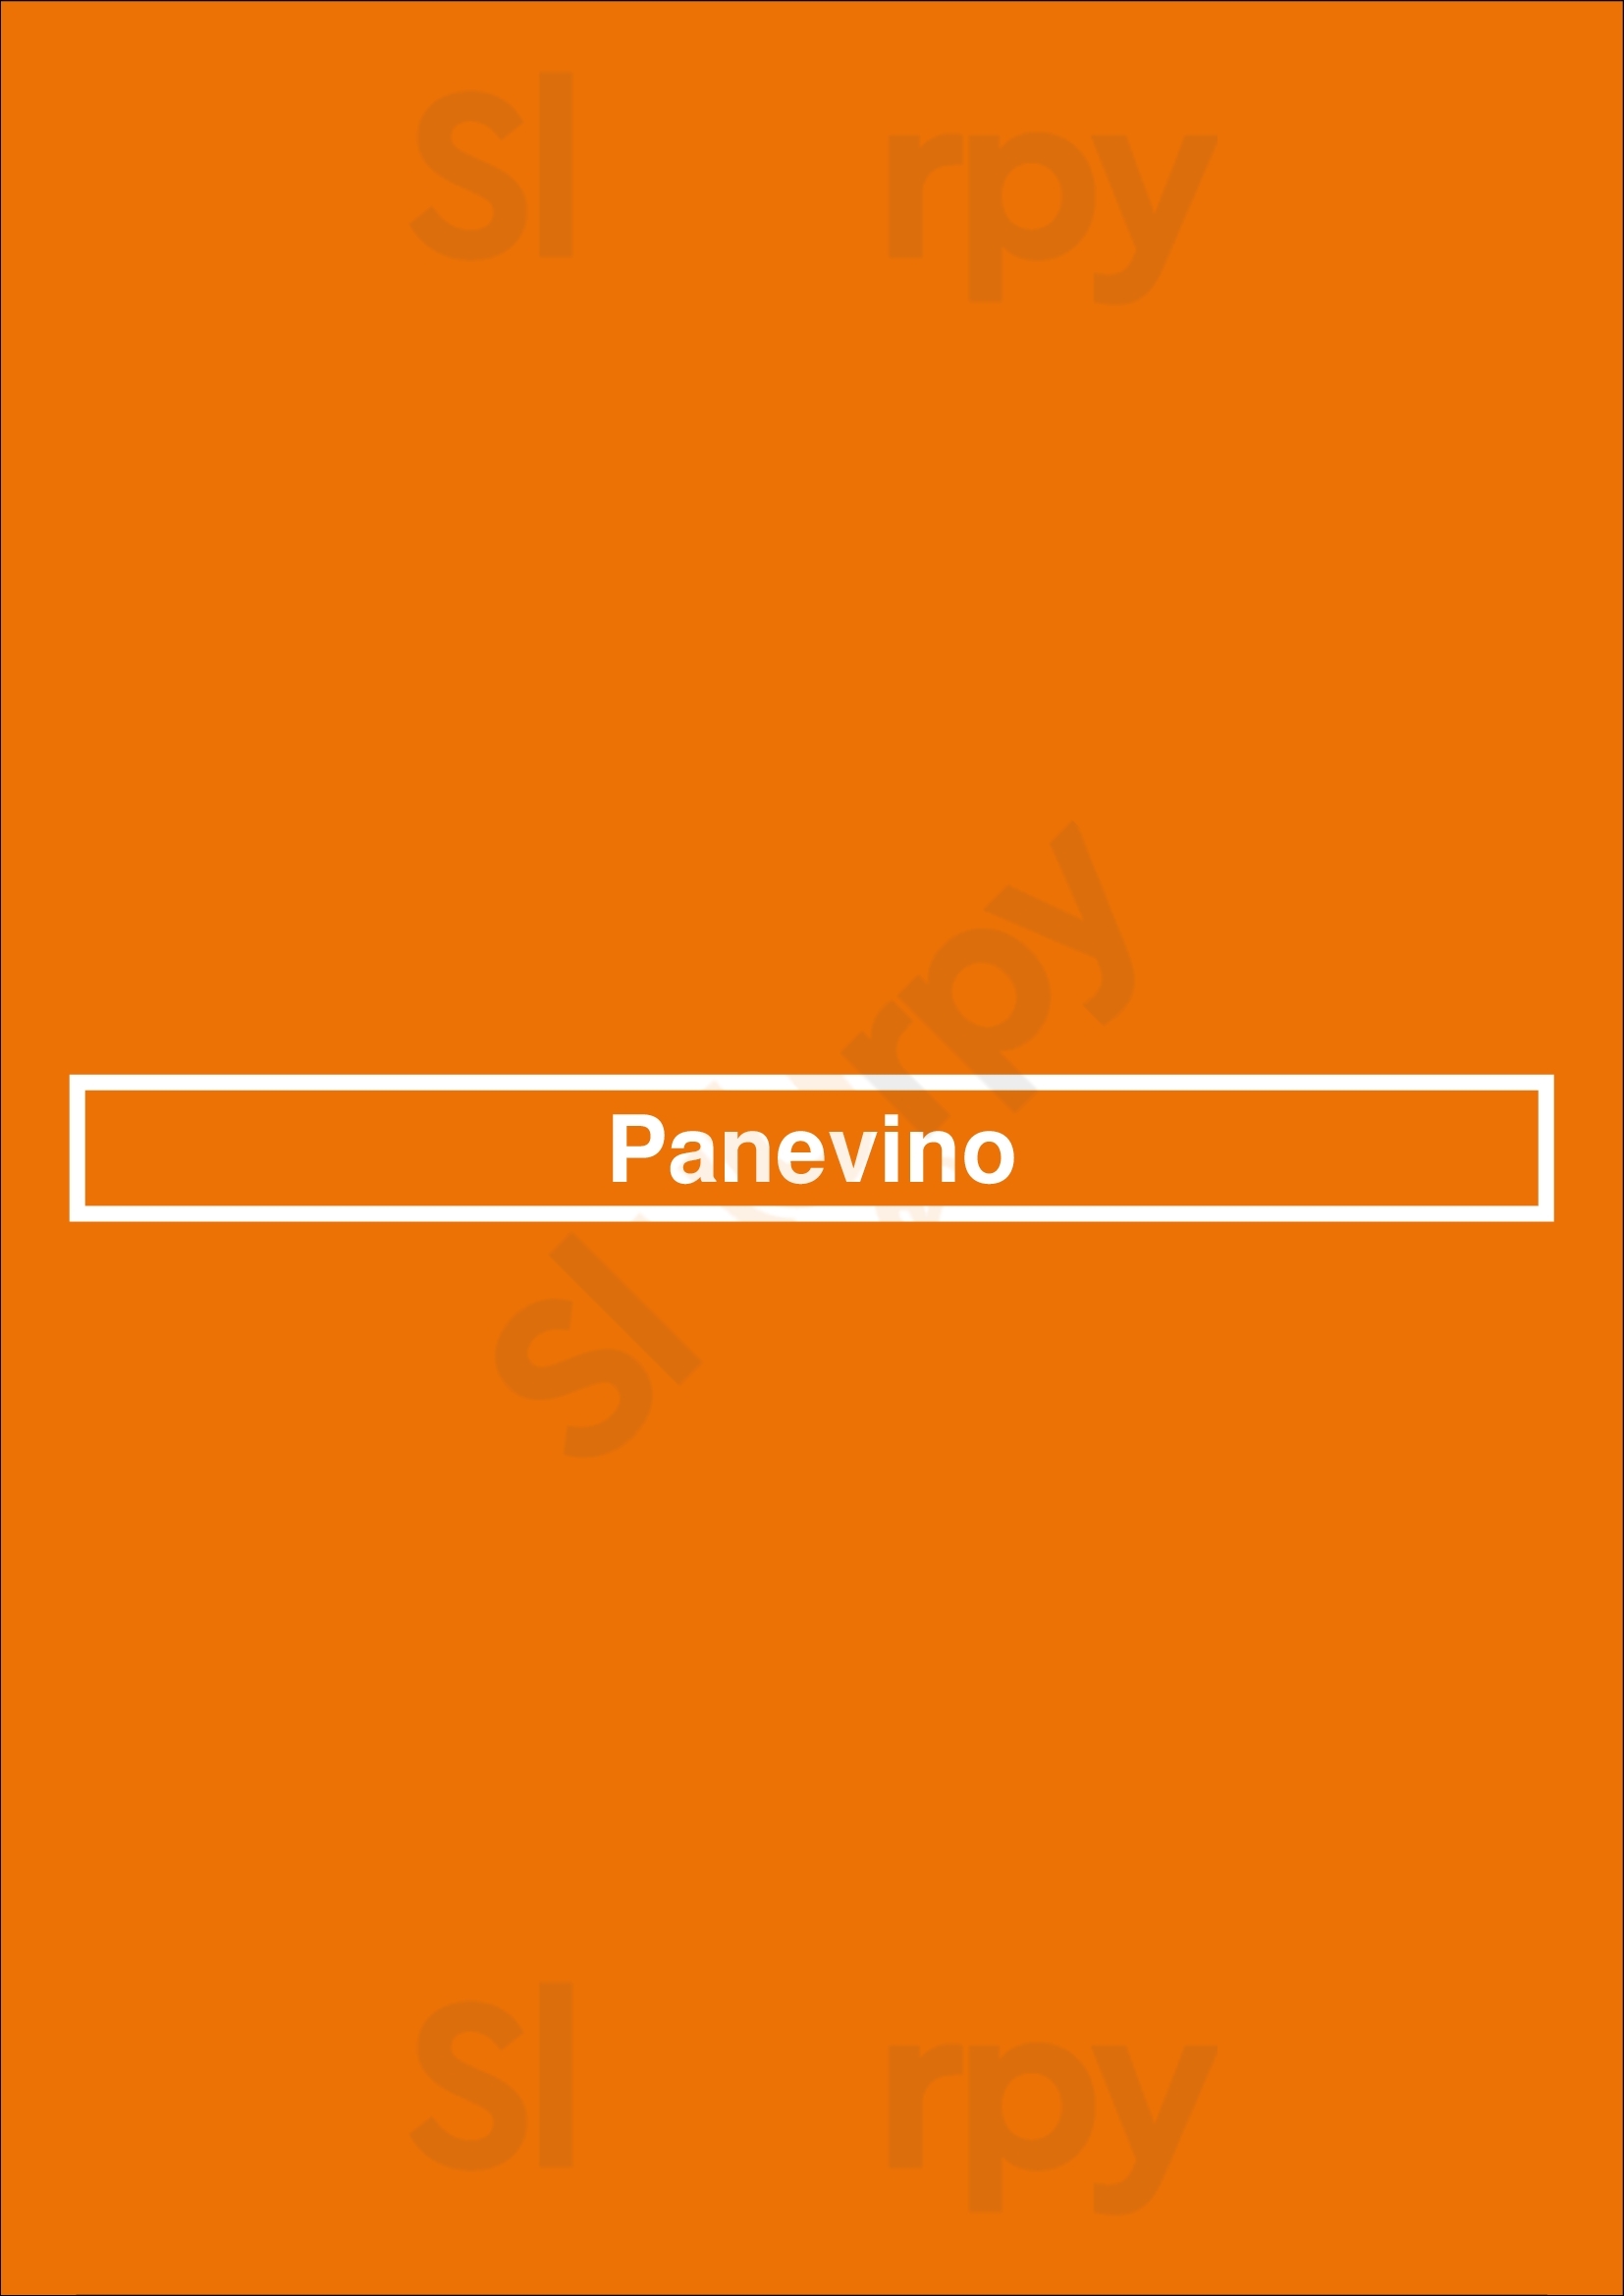 Panevino Italian Grille Las Vegas Menu - 1